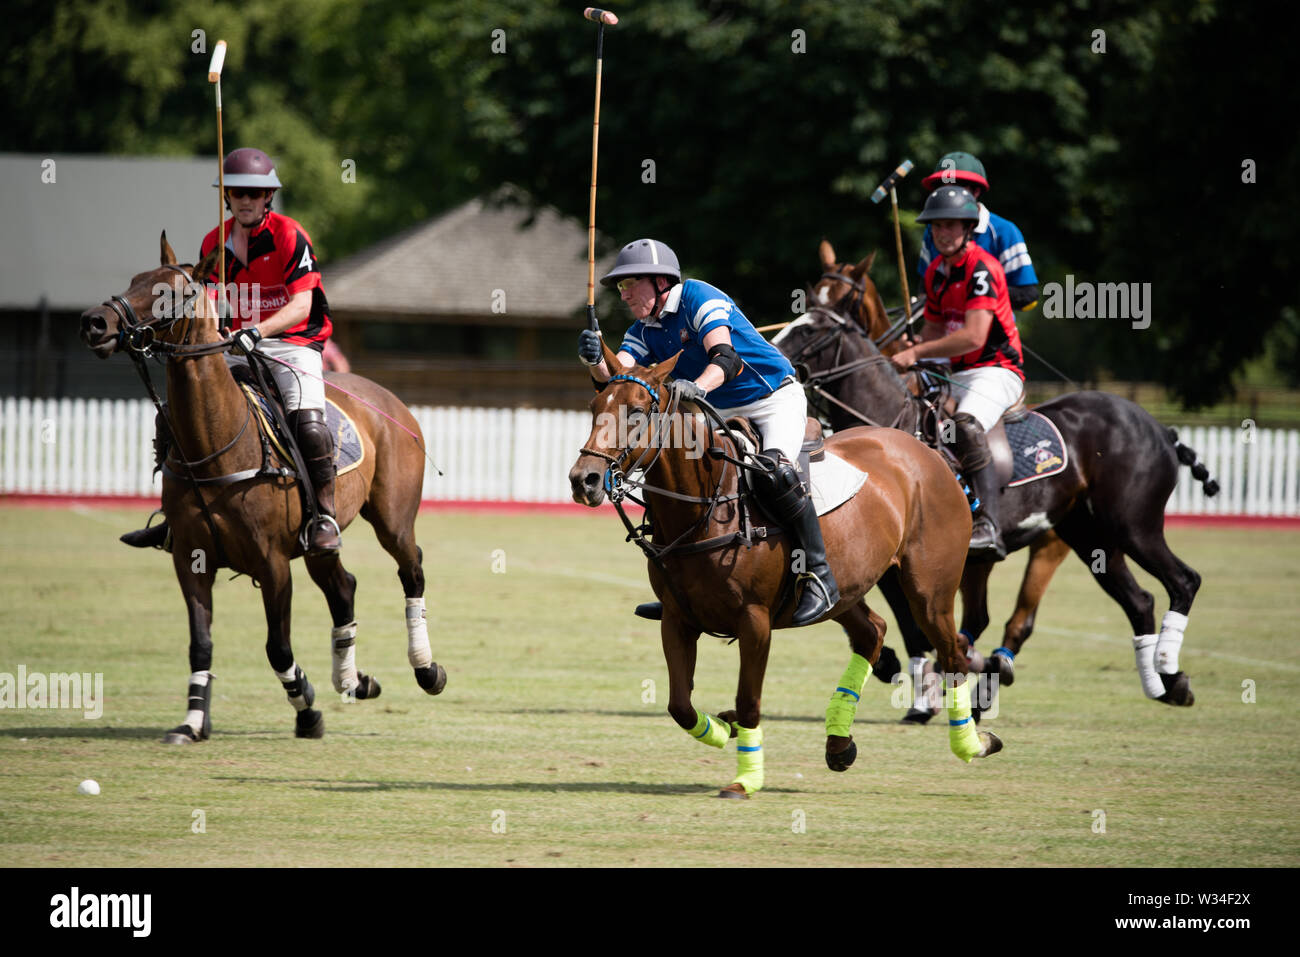 Offchurchbury Polo club VS Onley Equine Vets, Picnic at the polo, Dallas Burston Polo Club Stock Photo